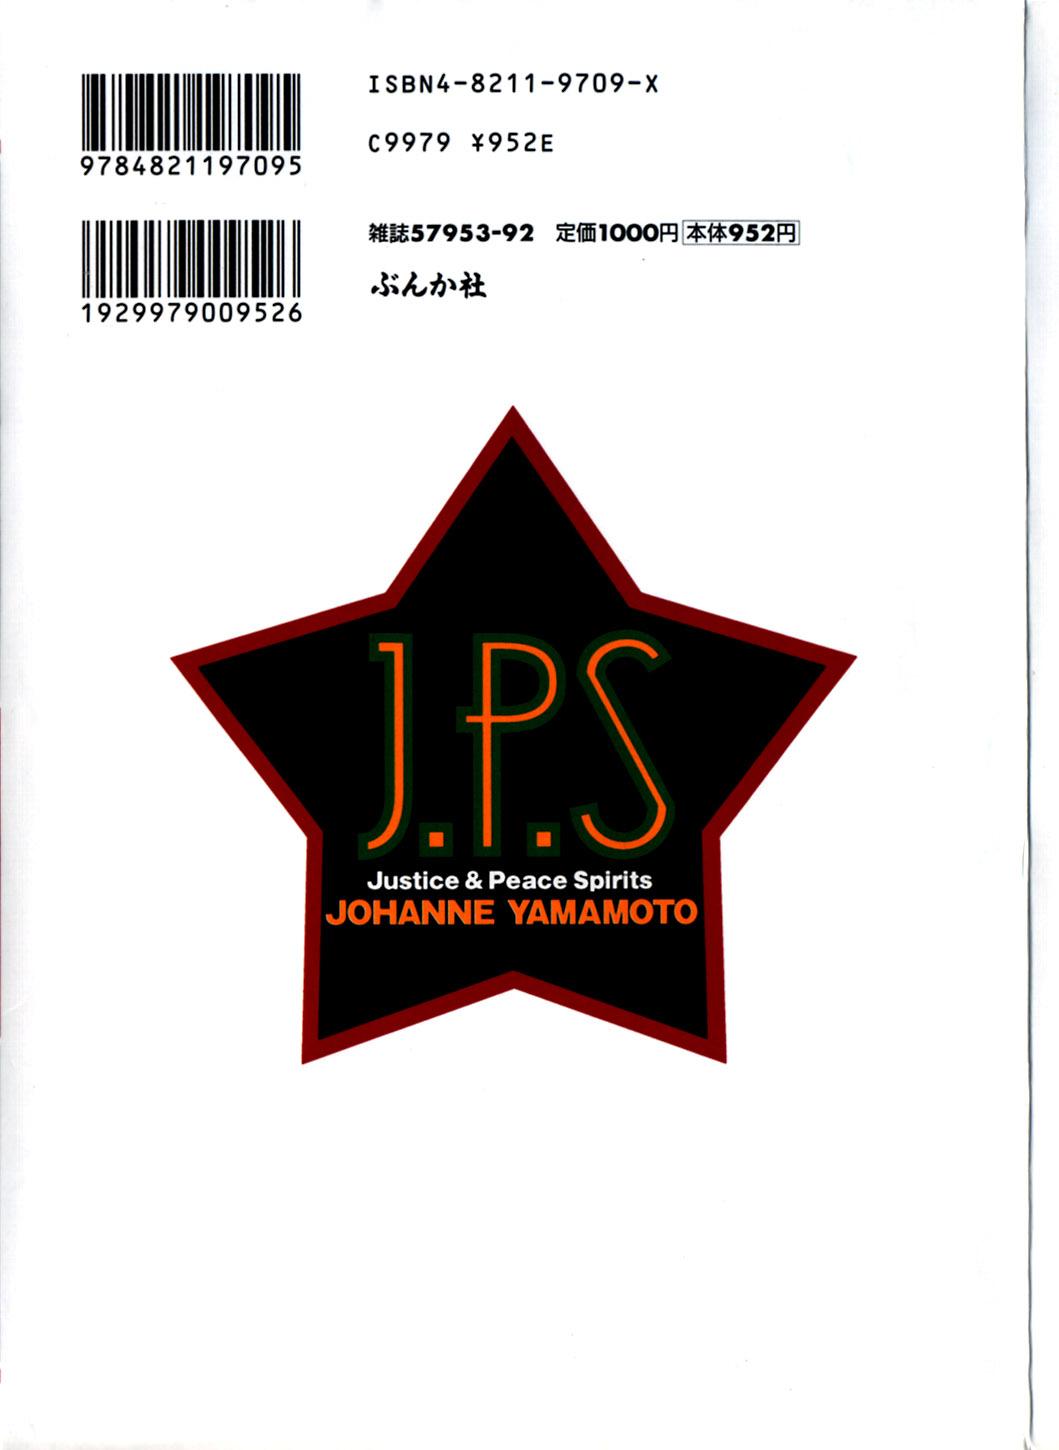 J.P.S - Justice & Peace Spirits 1